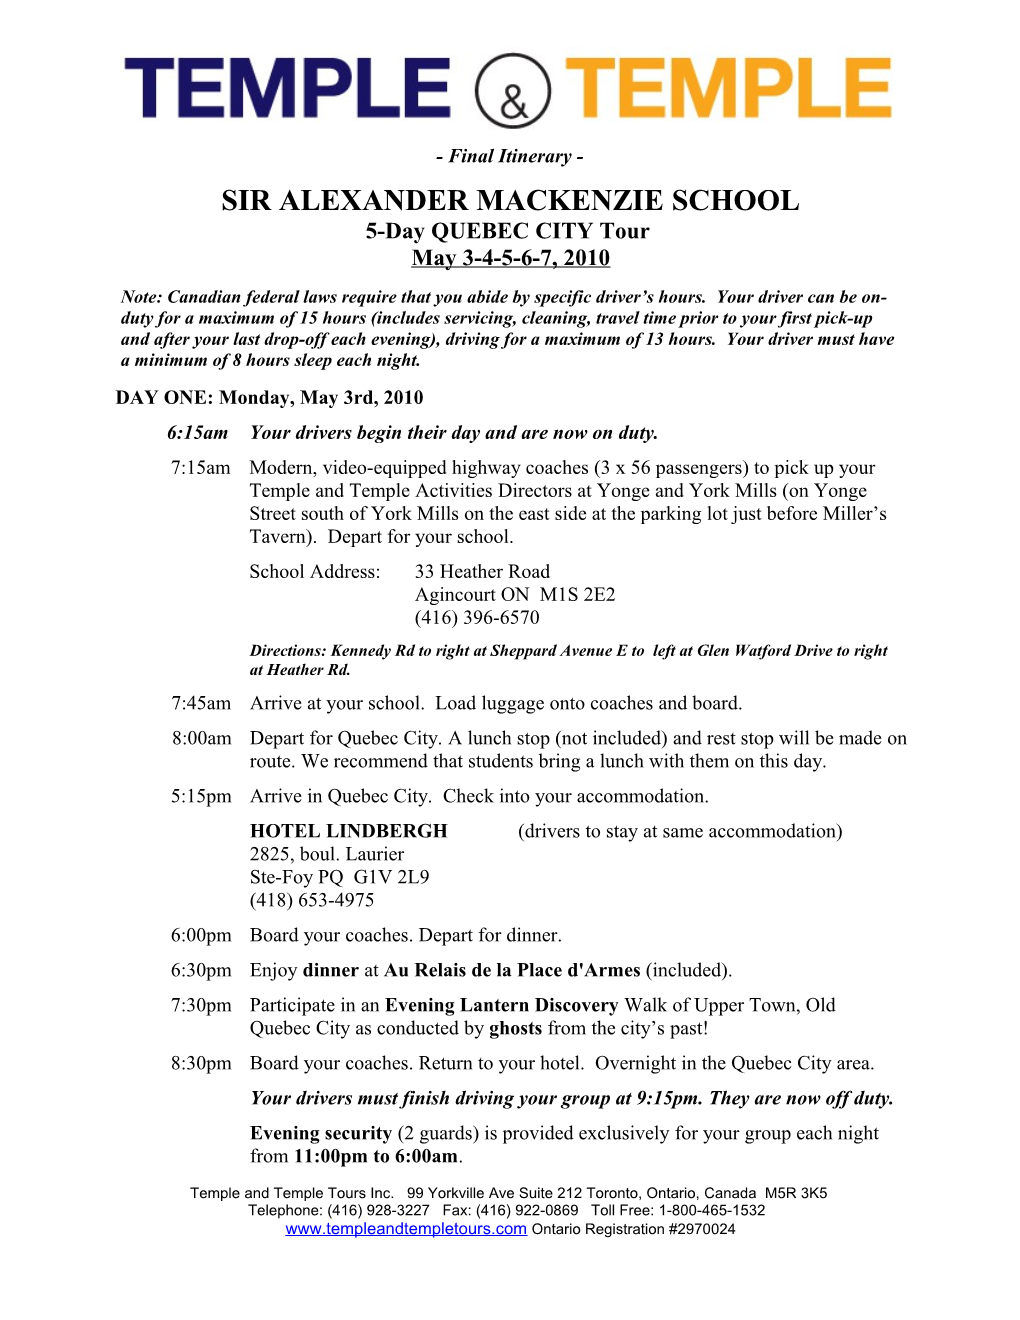 Sir Alexander Mackenzie School